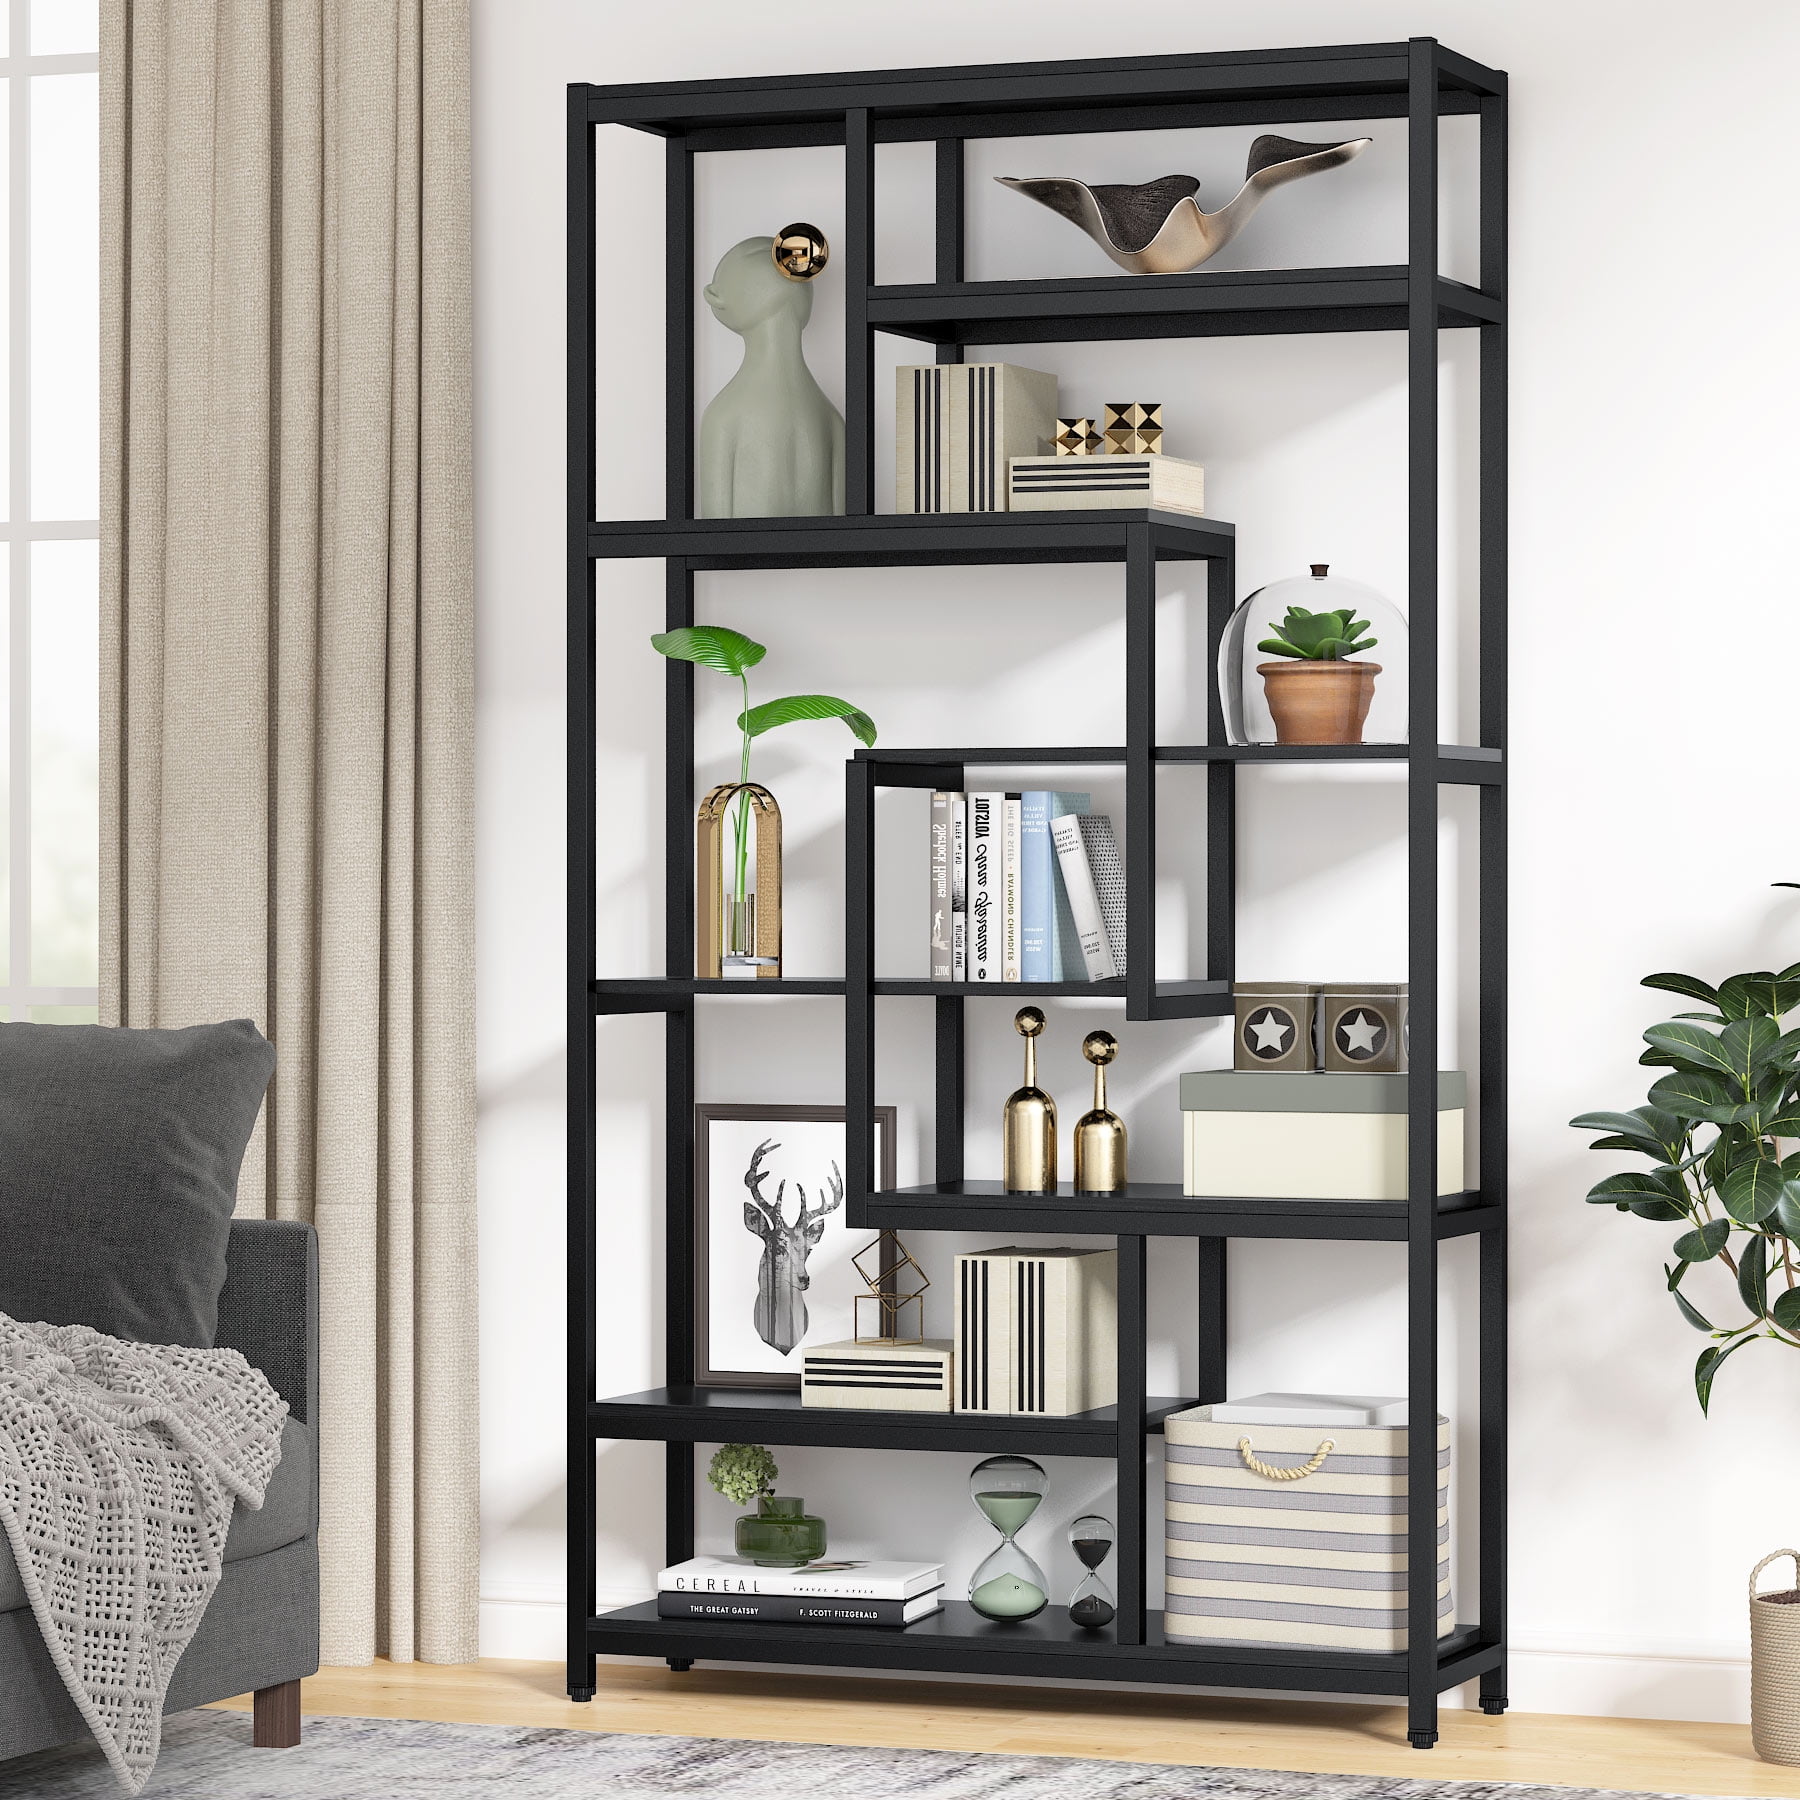 Gr8 Home Wooden Modern Open Shelving Unit Tall Bookcase Black Room Divider Storage Rack Display Organiser 